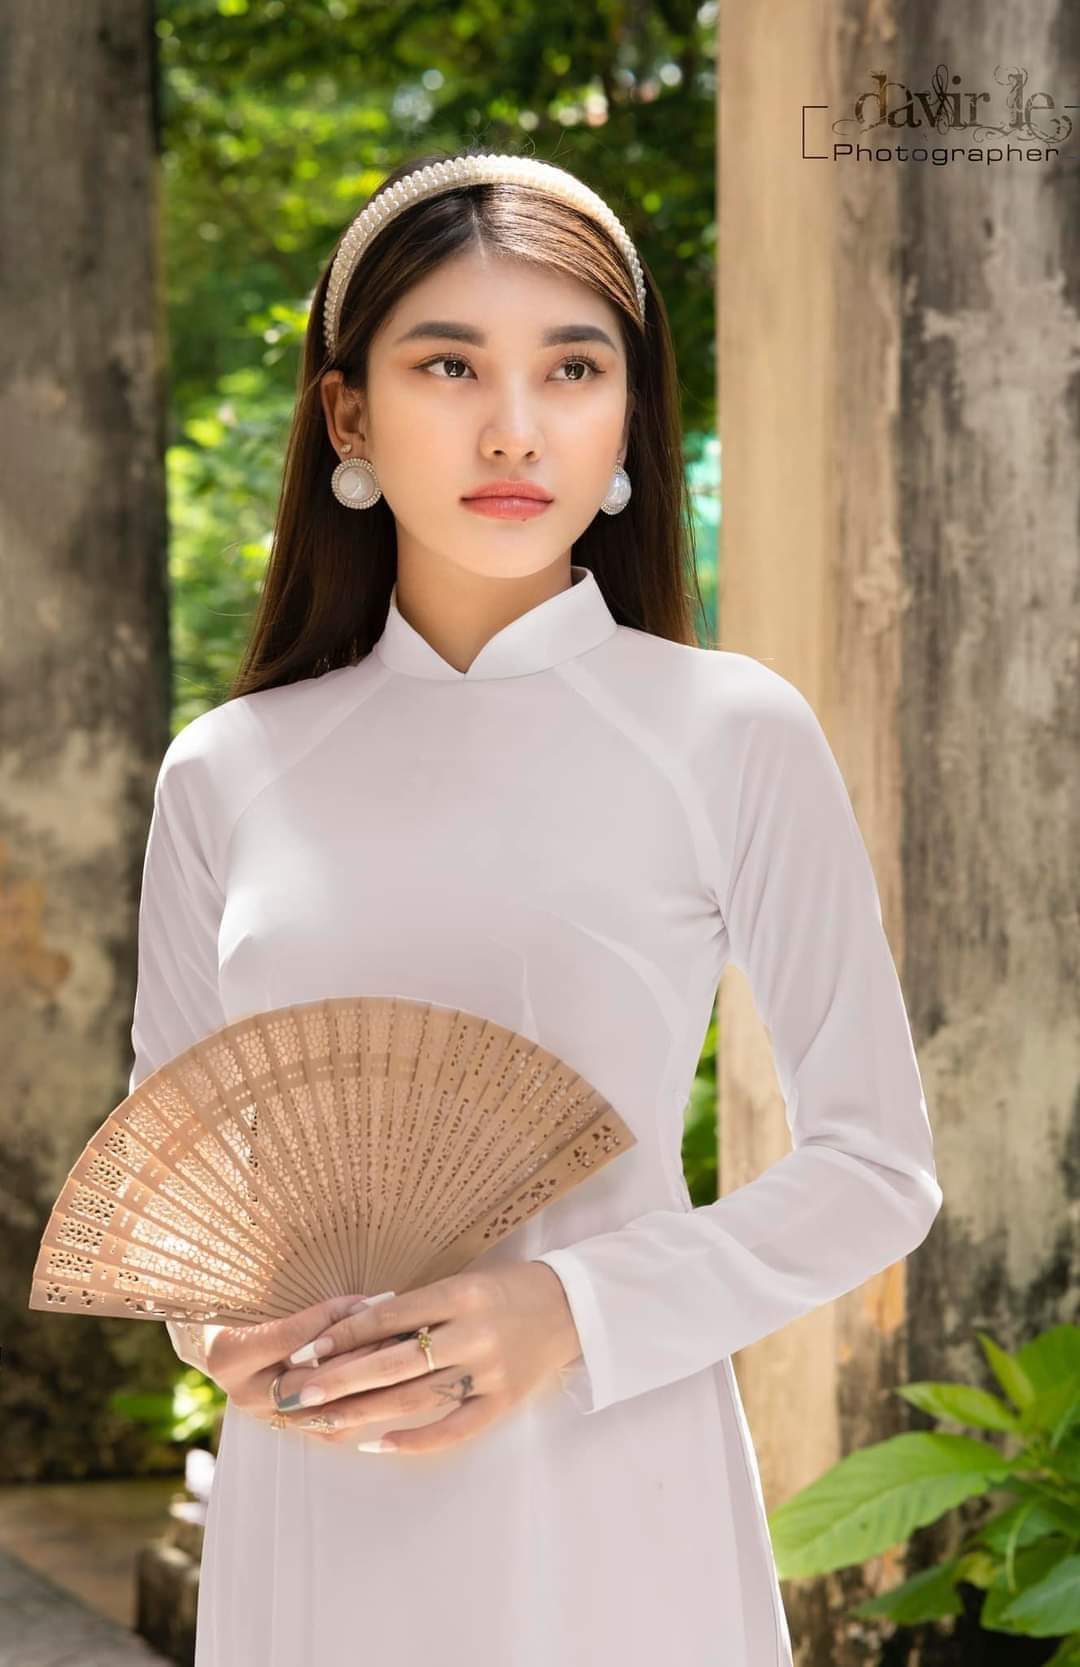 Pretty Vietnamese Girls 22.08.14.3 sunshine